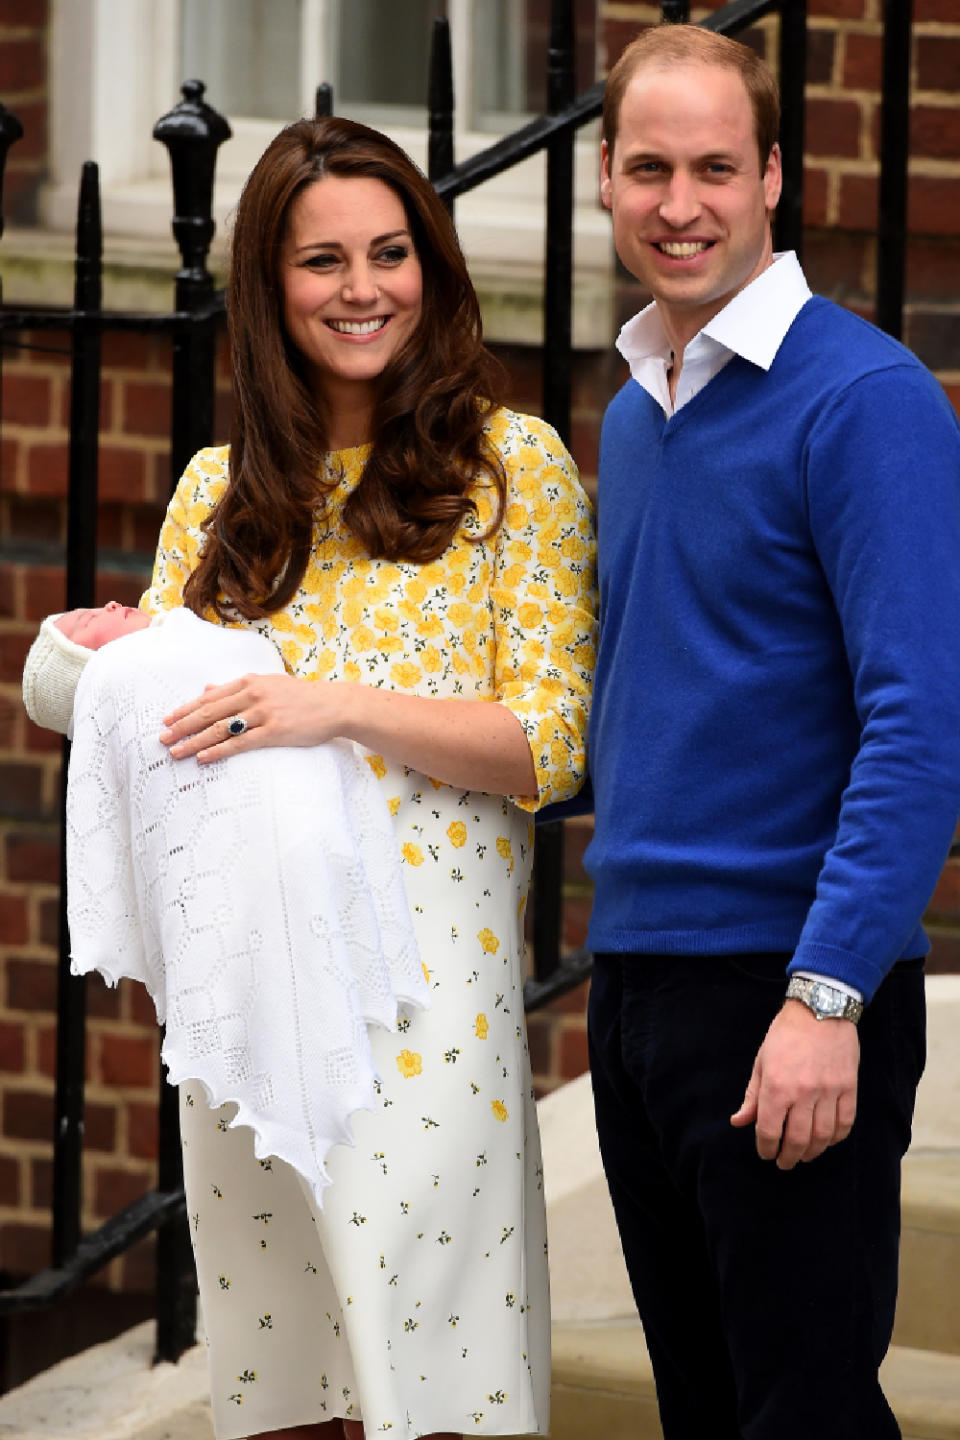 Royal parents do get maternity leave